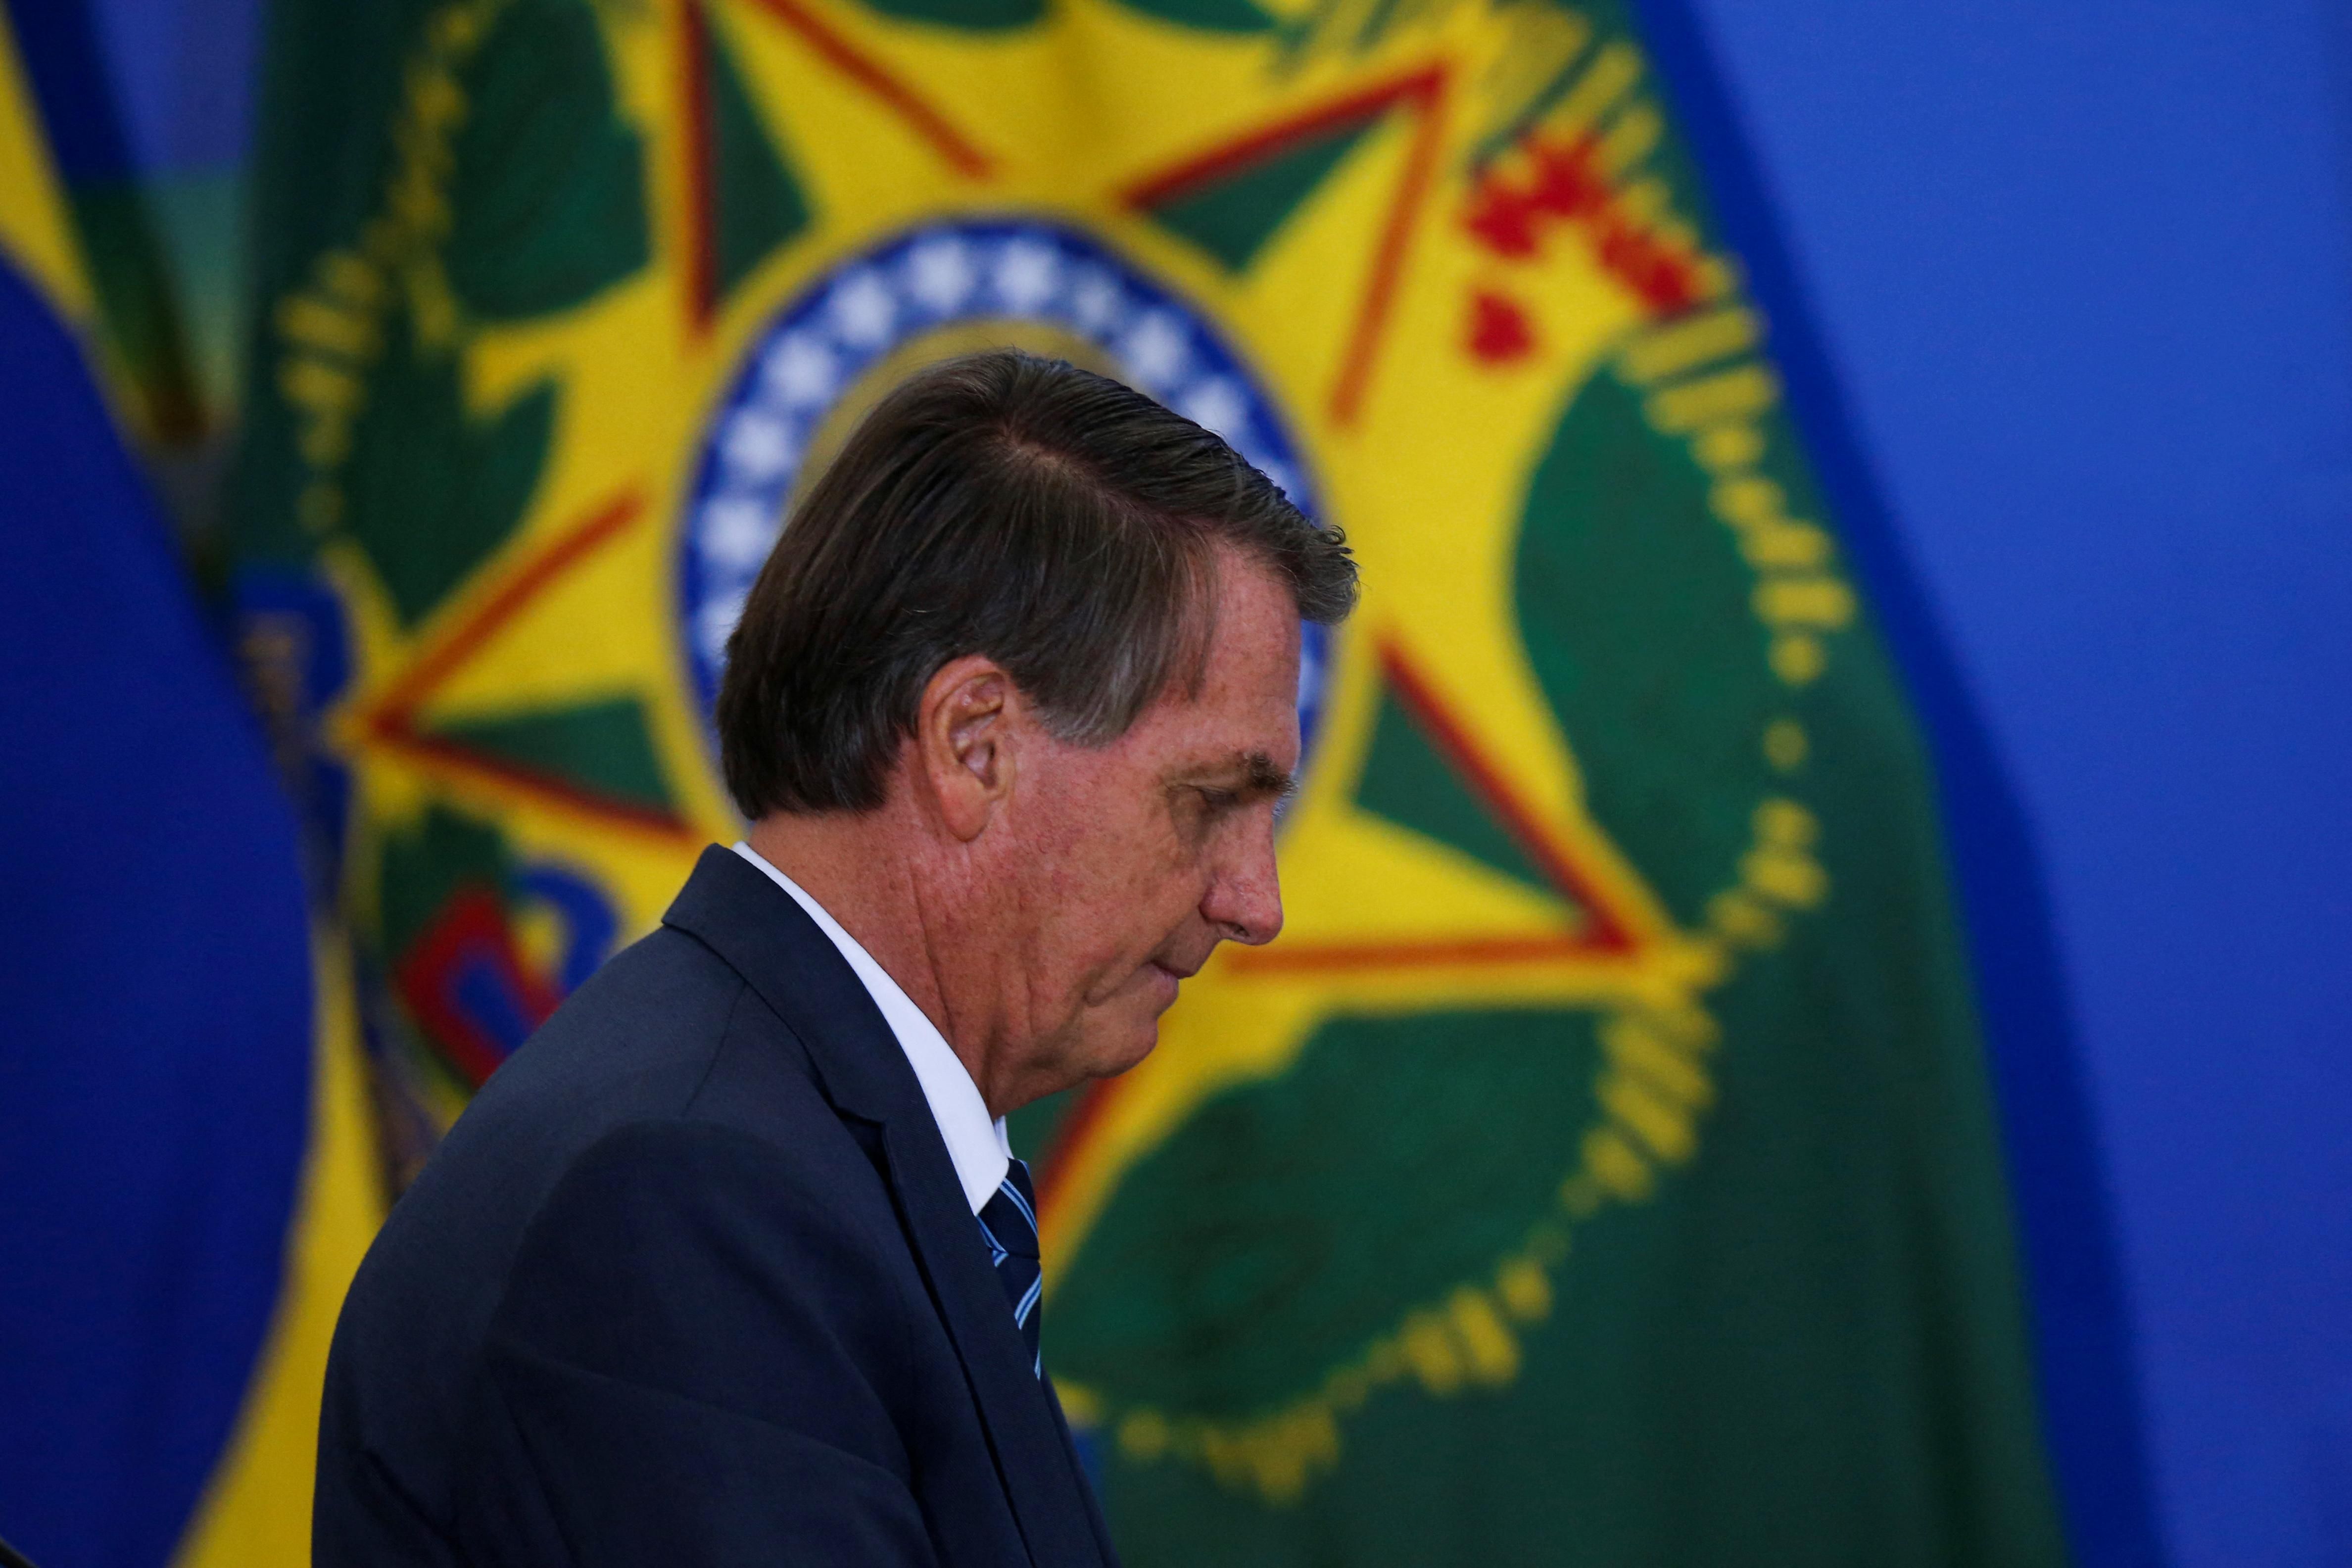 Brazil's President Jair Bolsonaro walks during a ceremony at the Planalto Palace in Brasilia, Brazil February 2, 2022.